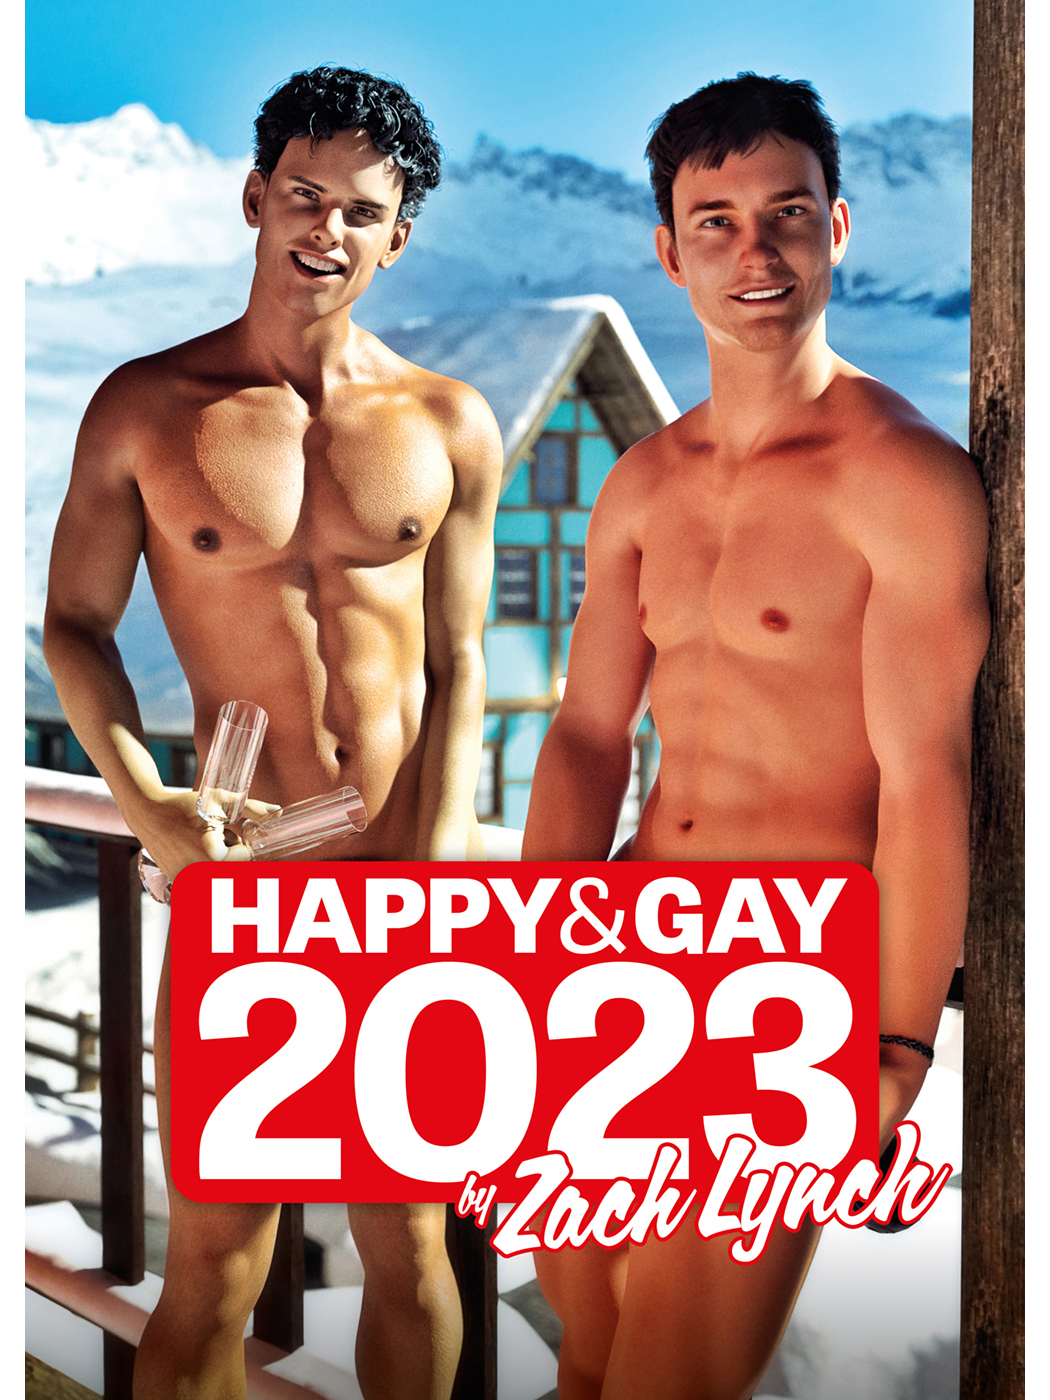 Happy & Gay by Zach Lynch Kalender 2023         